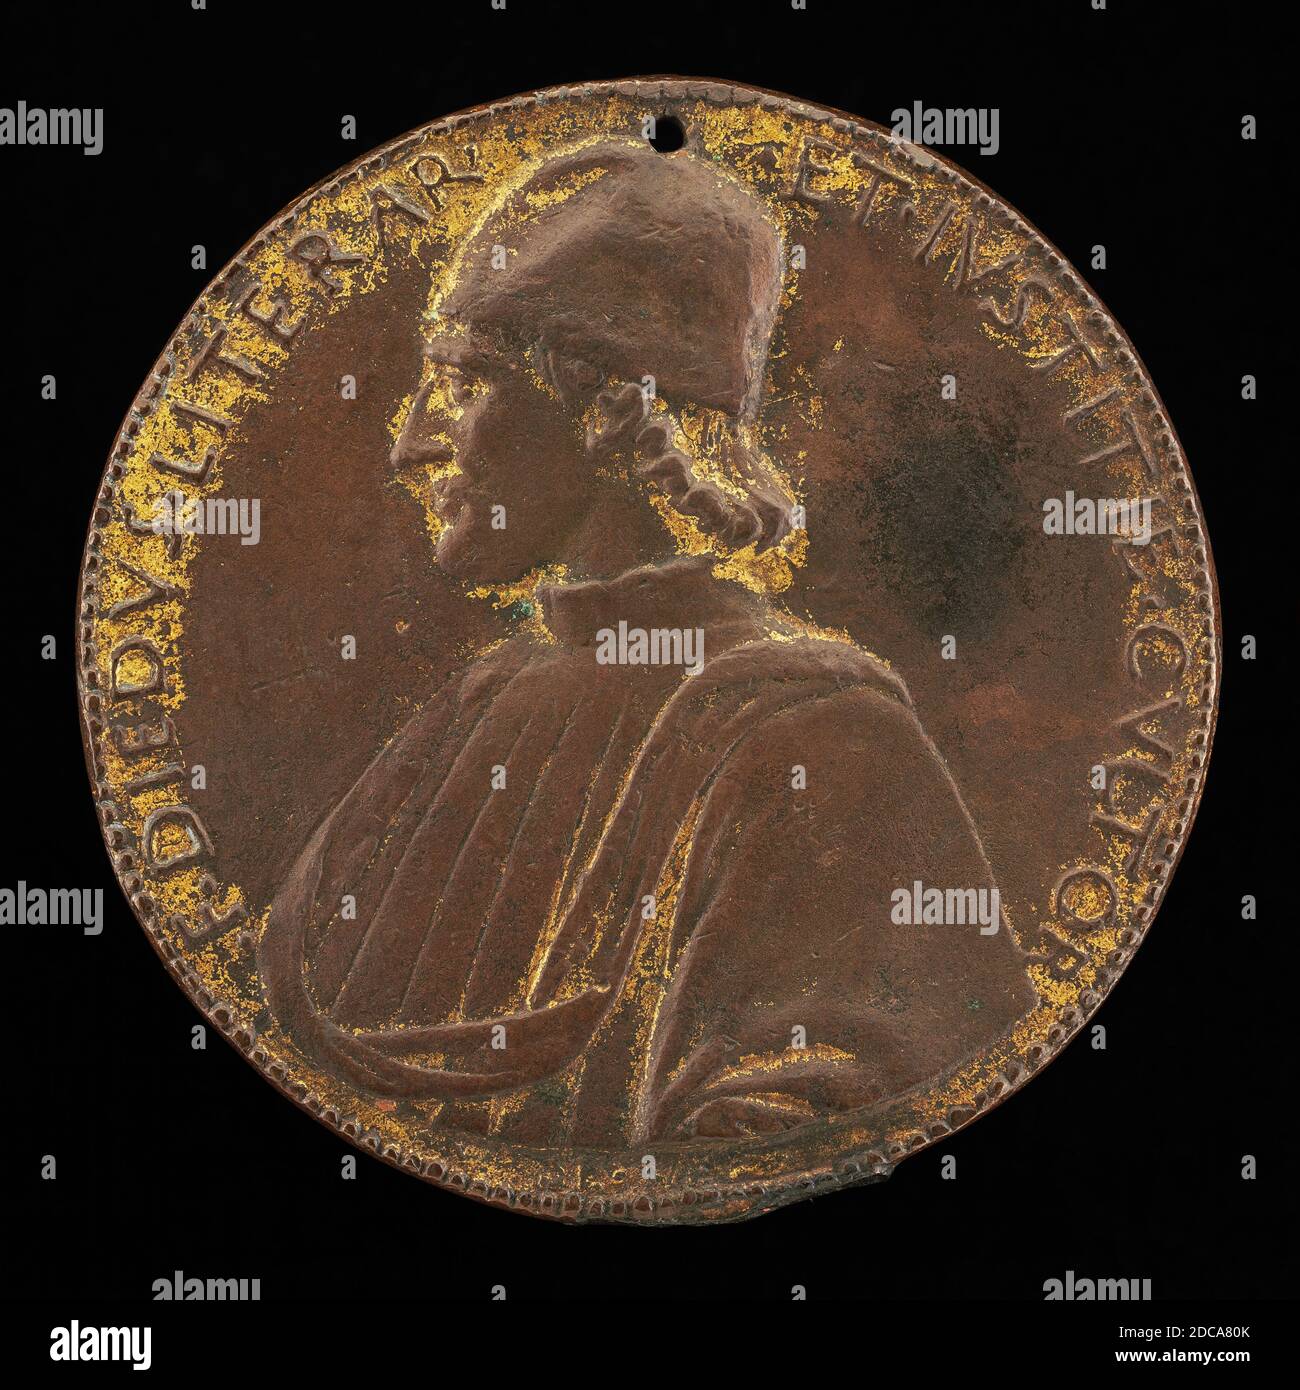 Bertoldo di Giovanni, (artist), Florentine, c. 1430/1440 - 1491, Francesco Diedo, 1475, gilded bronze/After-cast, overall (diameter): 8.25 cm (3 1/4 in.), gross weight: 197.99 gr (0.436 lb.), axis: 12:00 Stock Photo